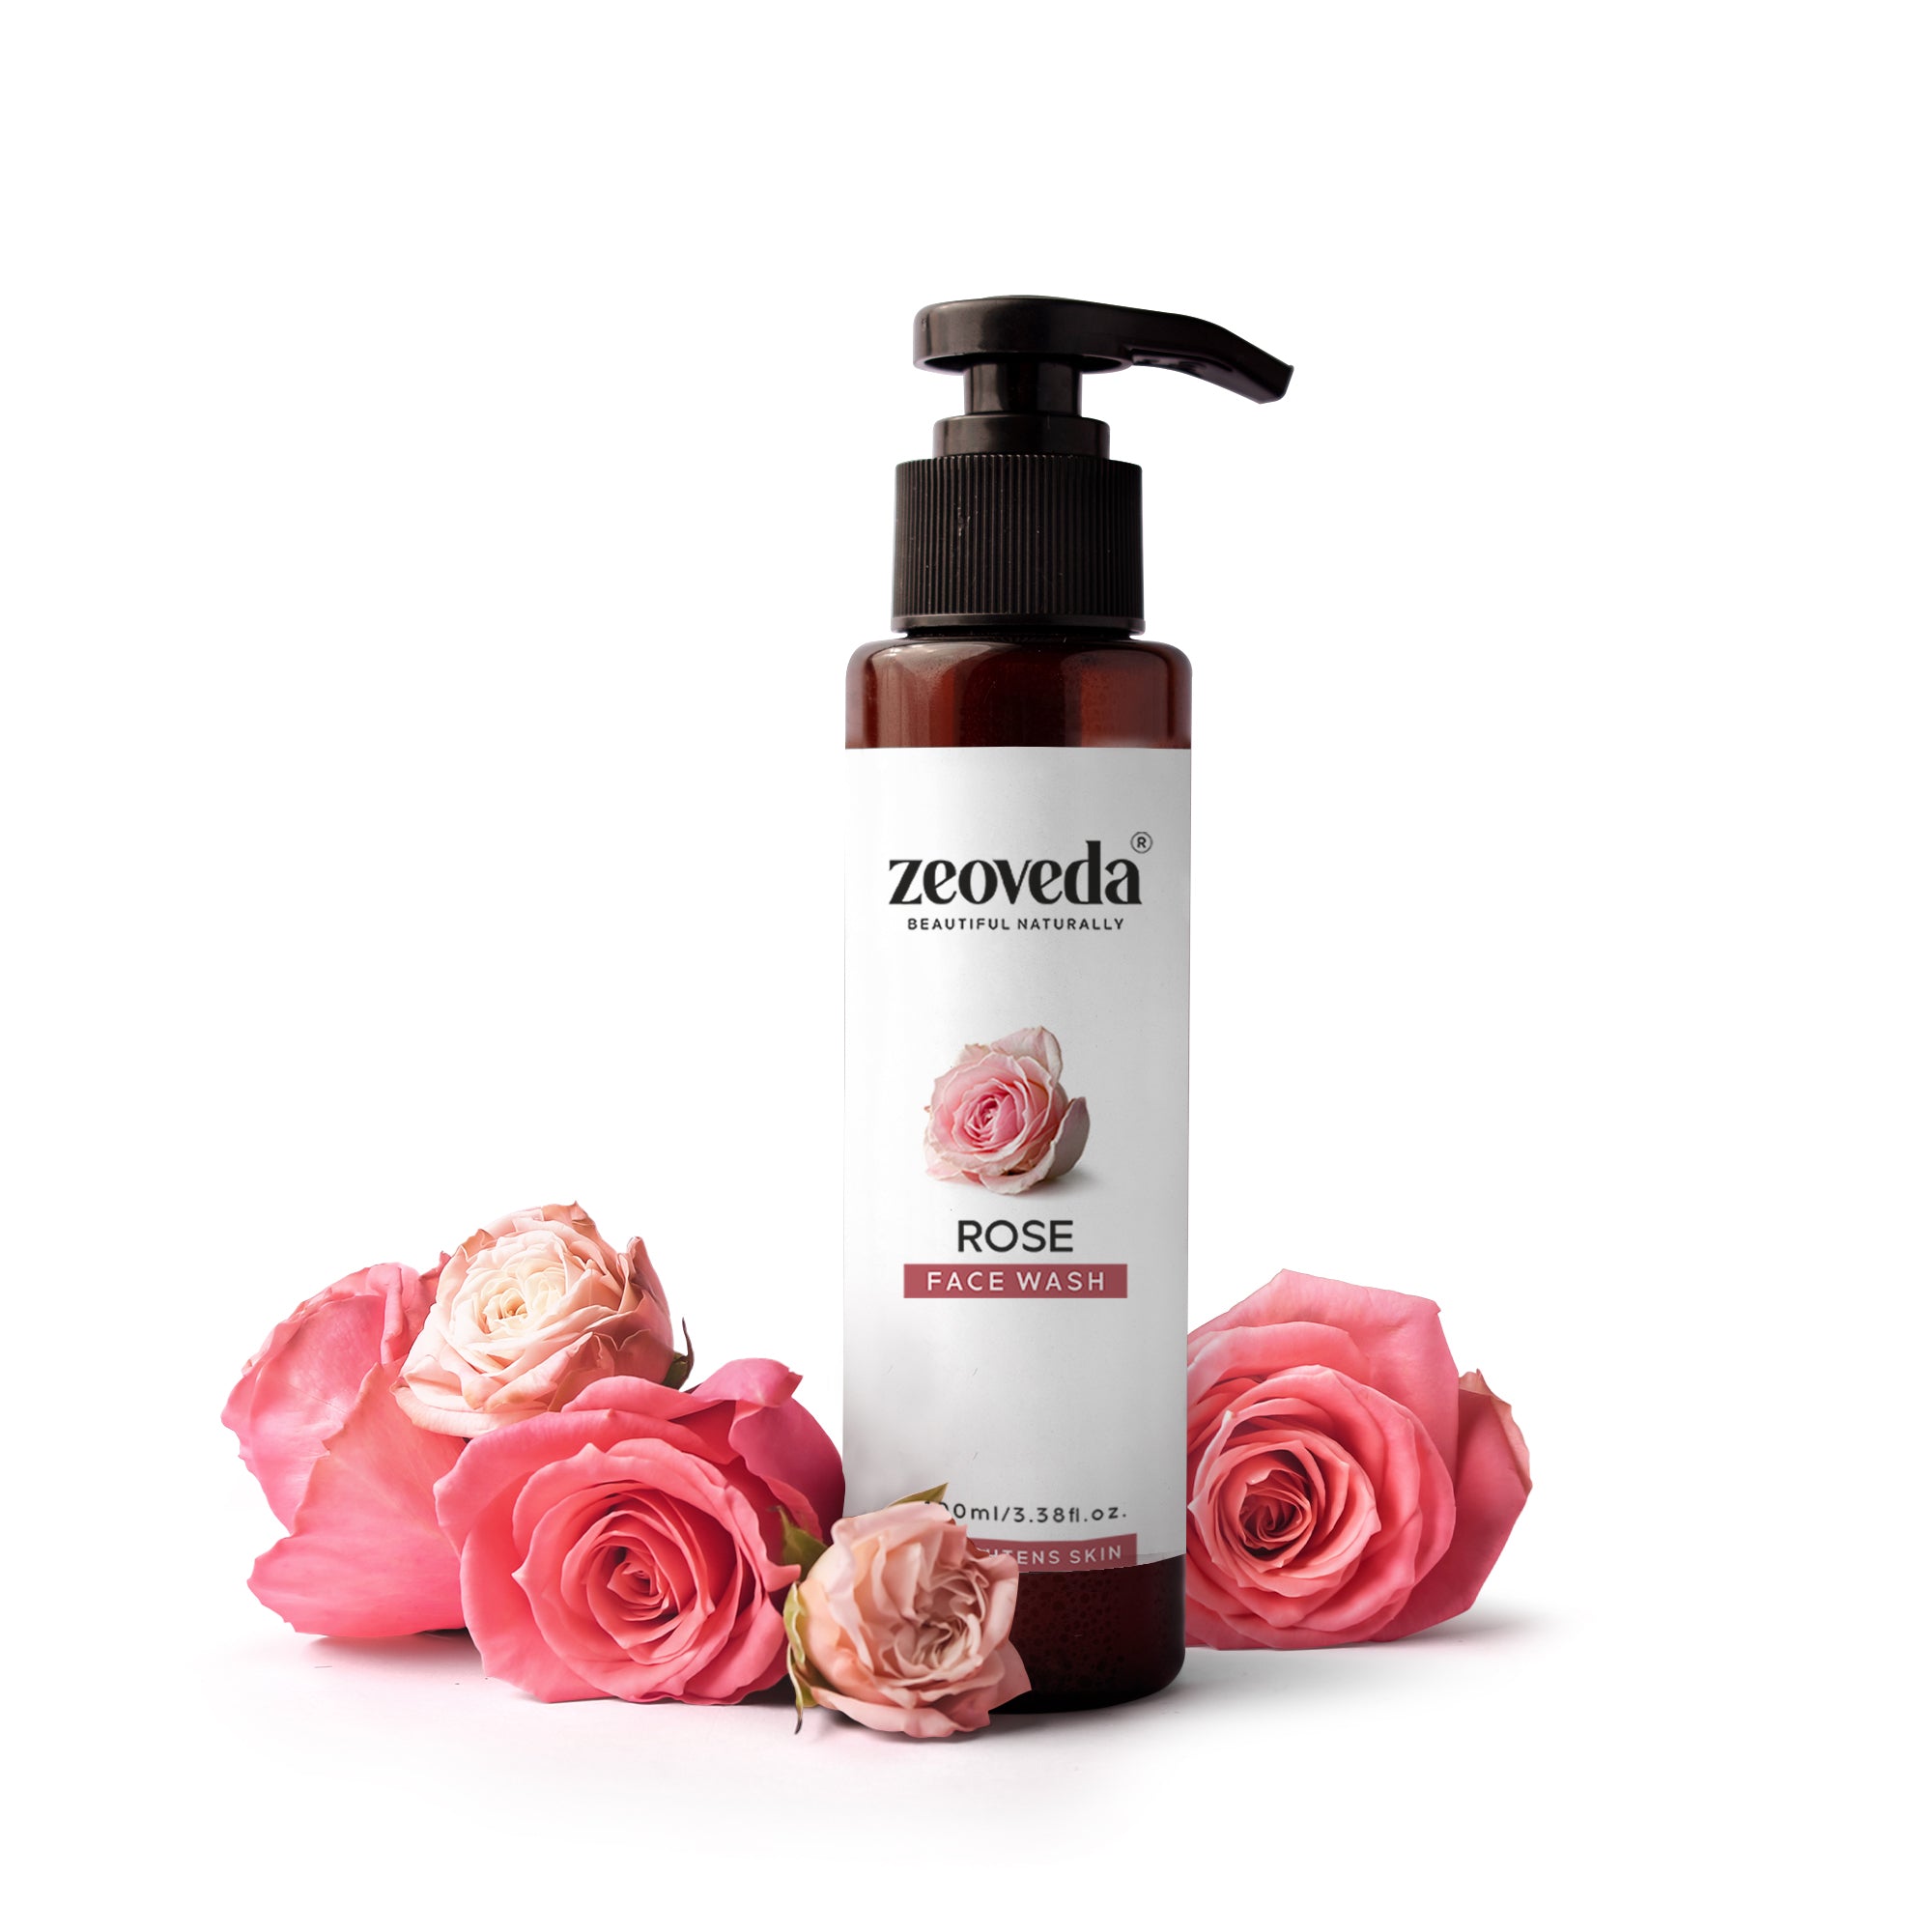 Tea Tree Scrub(150GM) + Rose Face Wash(100ML) Combo For Spotless Skin